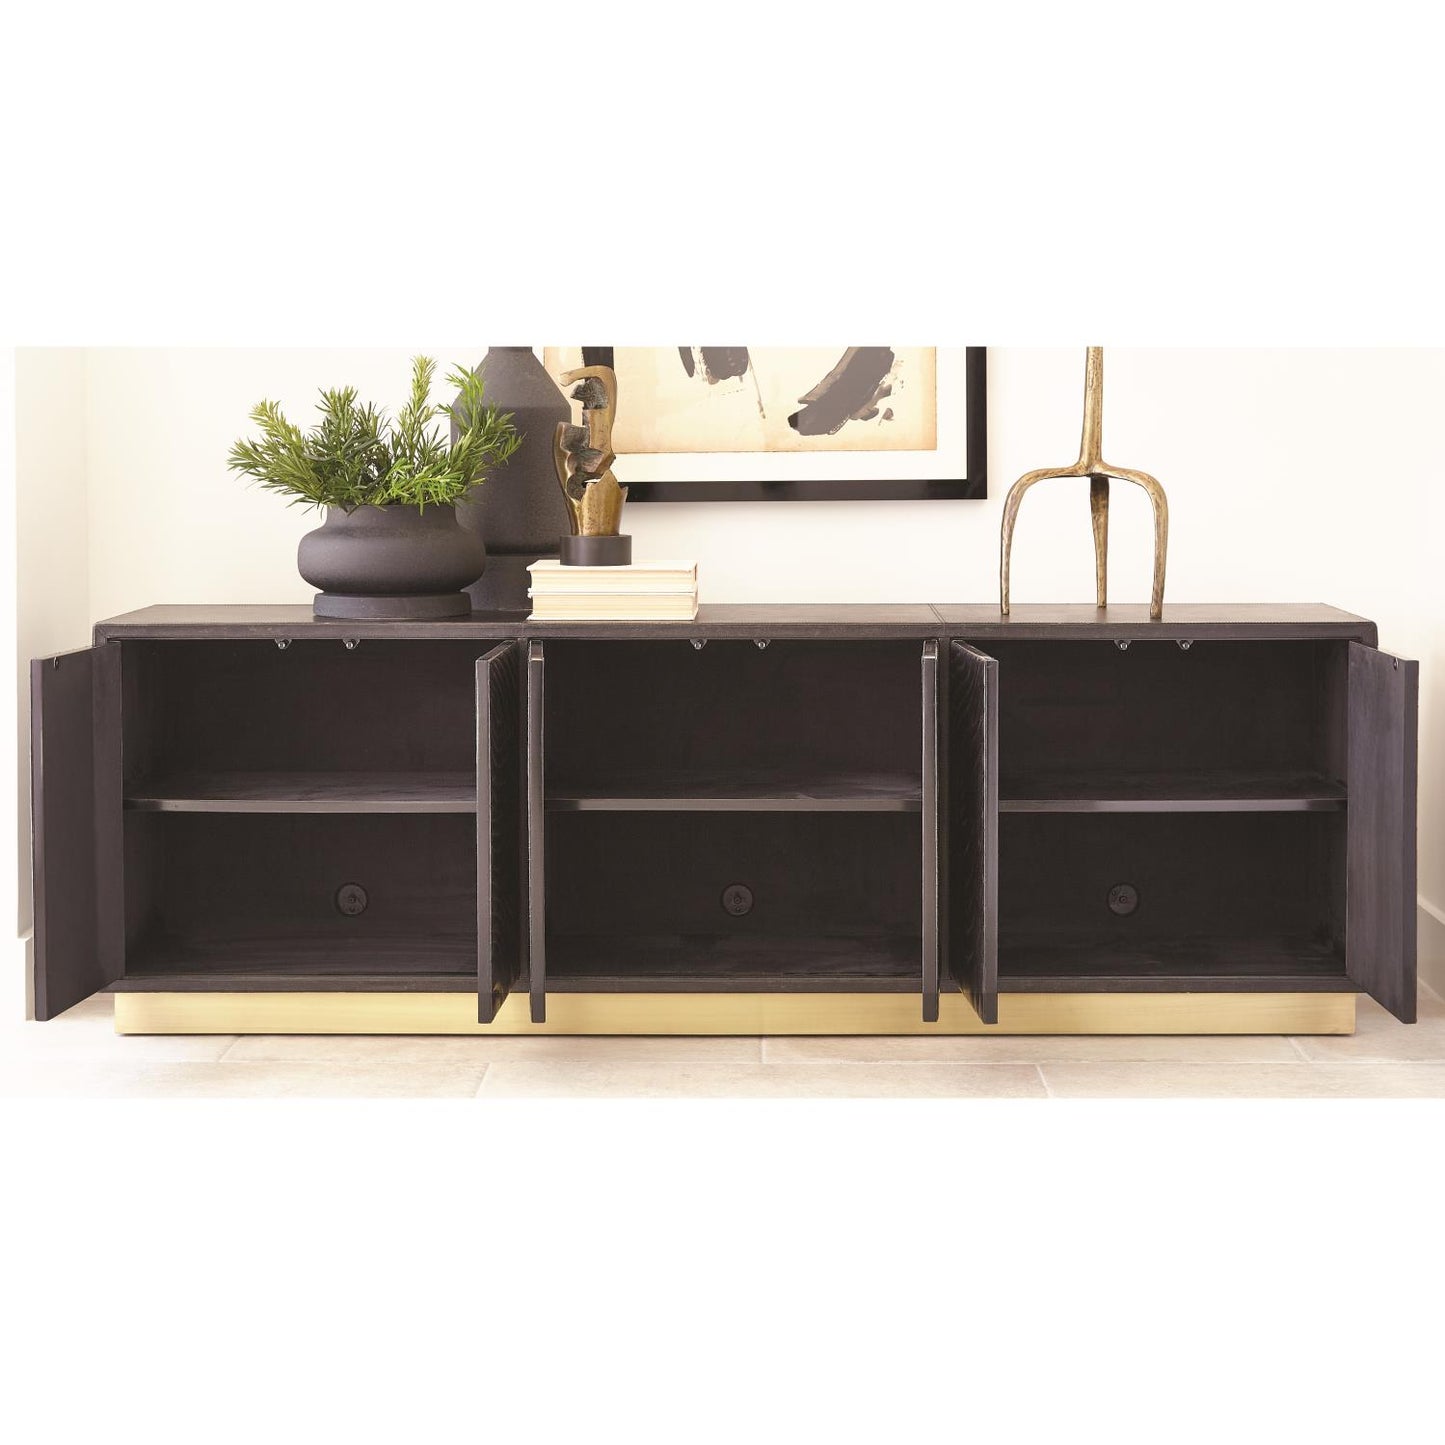 Forest Long Cabinet - Charcoal Leather - Grats Decor Interior Design & Build Inc.